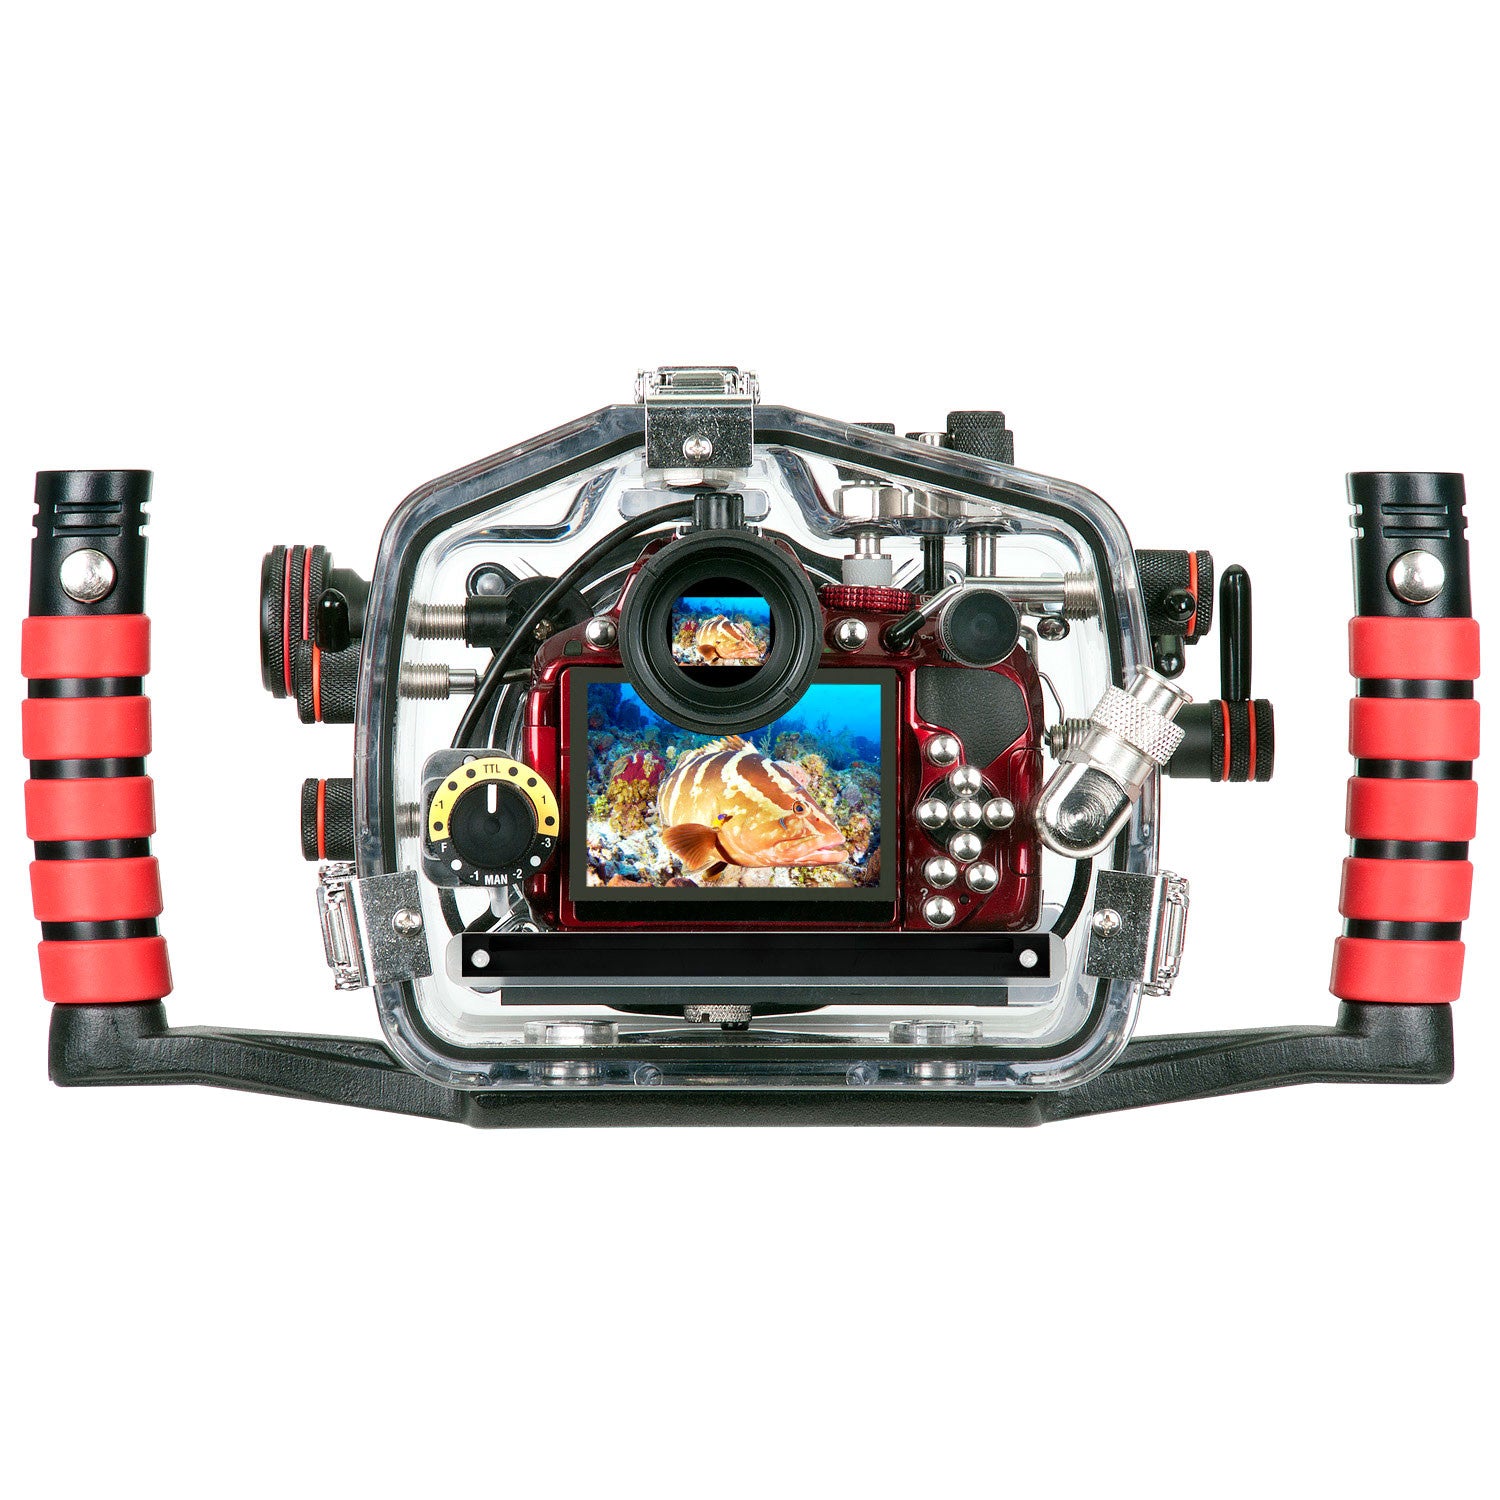 200FL Underwater TTL Housing for Nikon D5300 DSLR Cameras